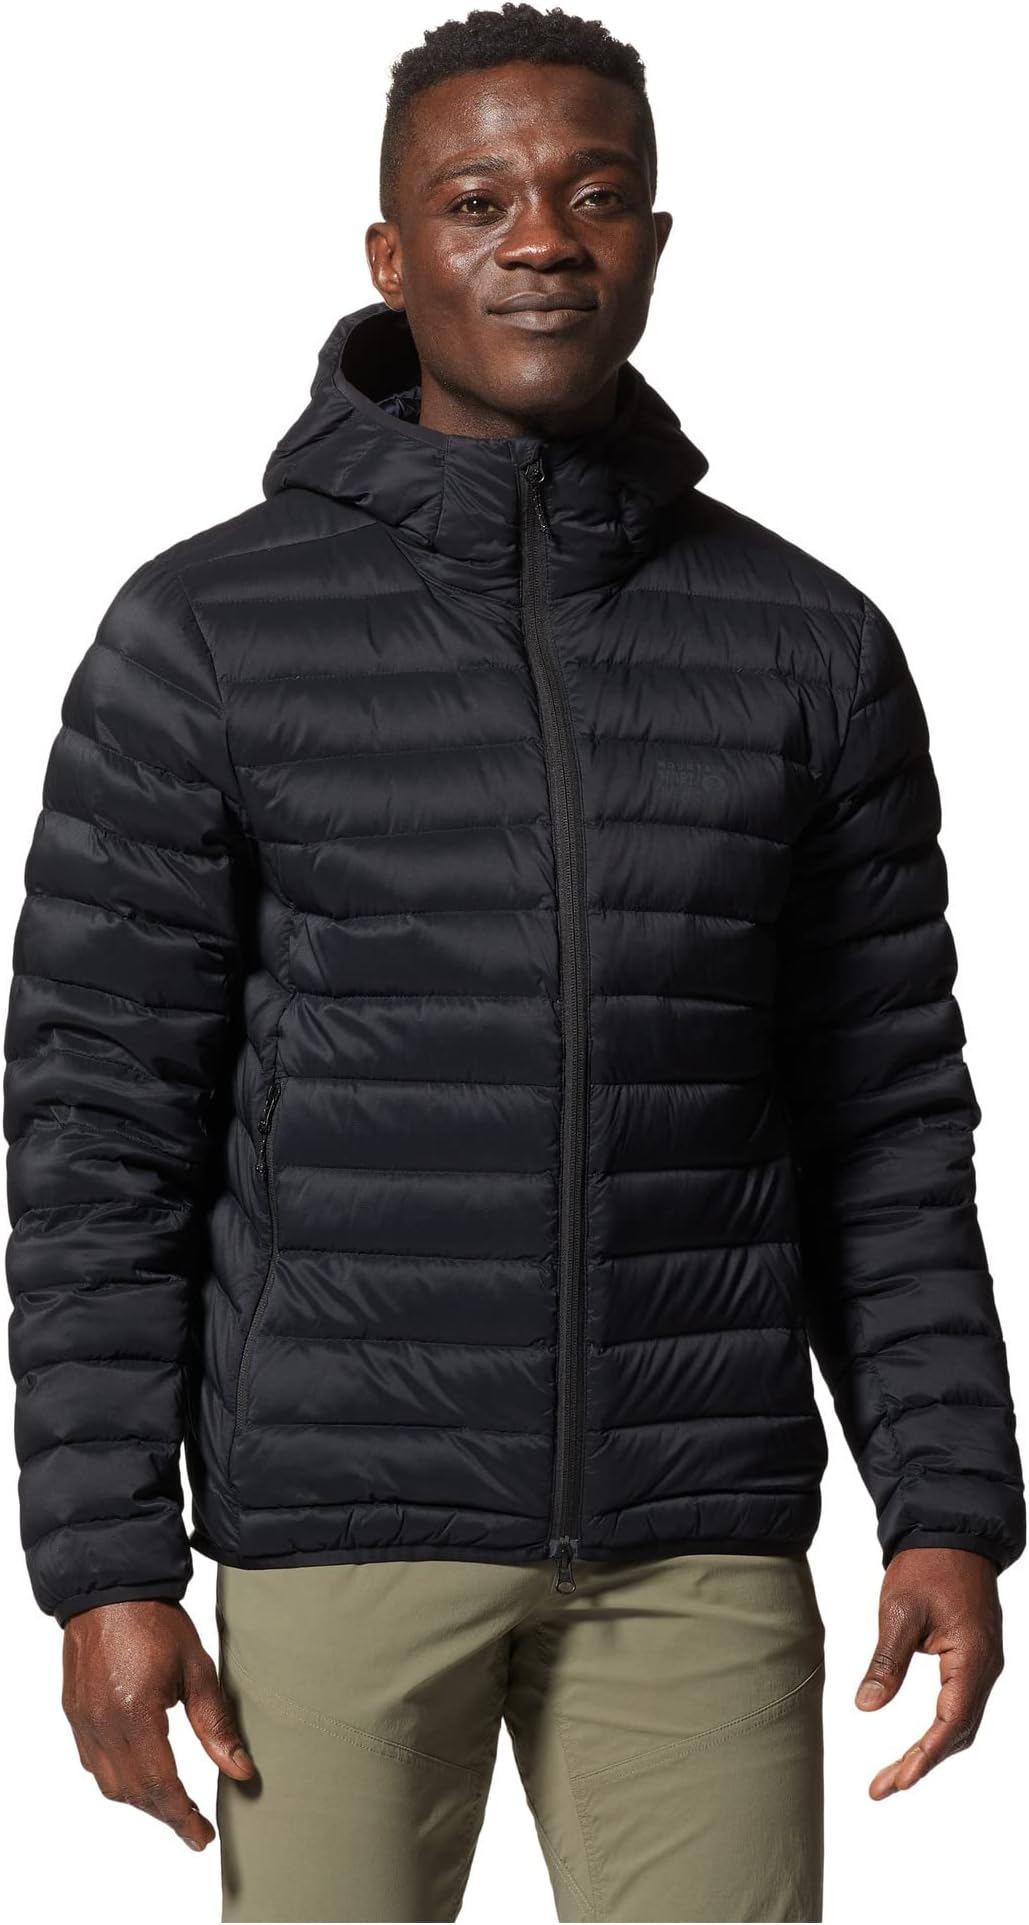 Куртка Deloro Down Full Zip Hoodie Mountain Hardwear, черный